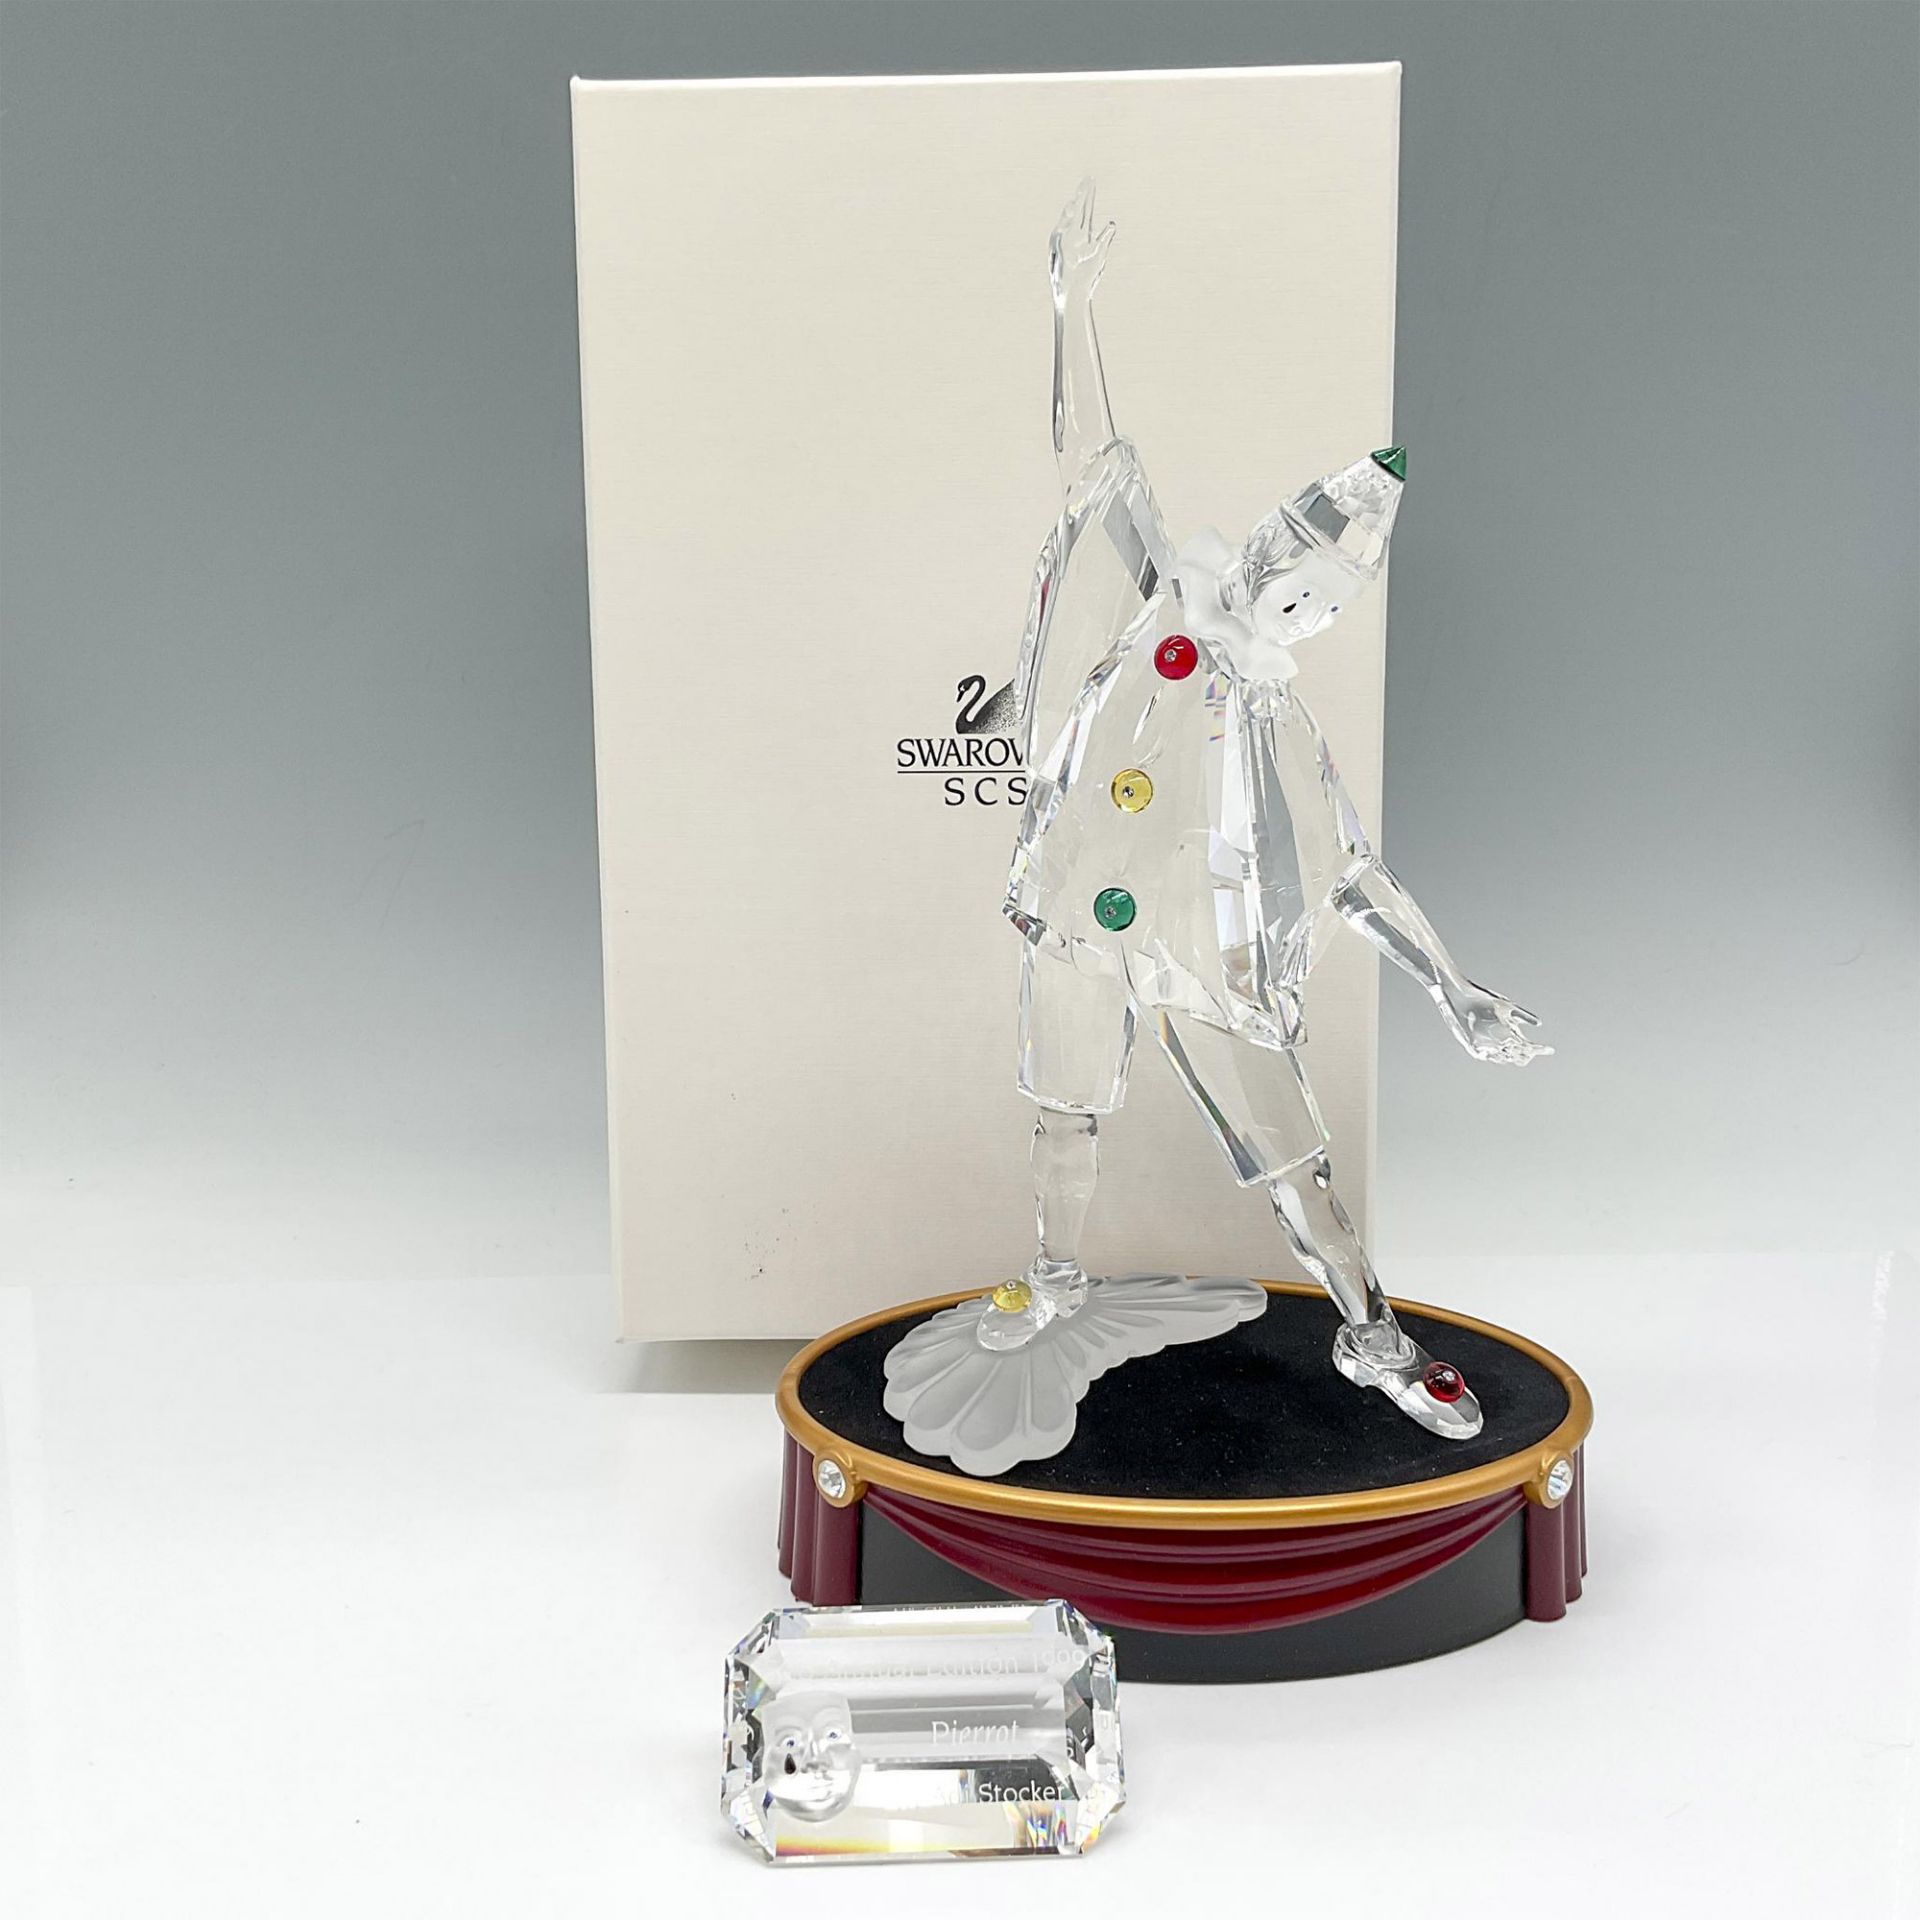 Swarovski SCS Figurine, Masquerade Pierrot + Base, Plaque - Image 4 of 4